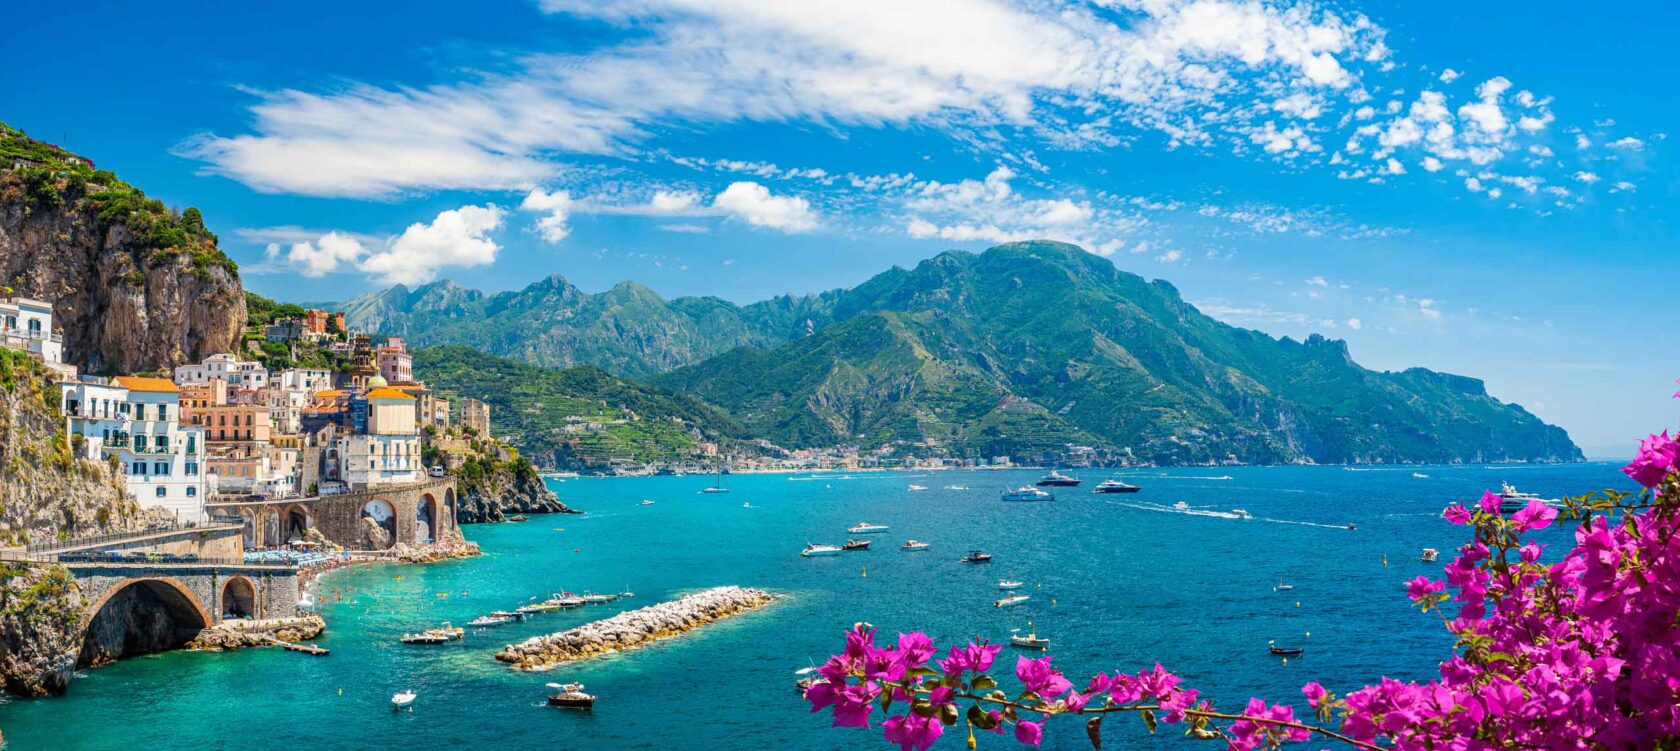 Landscape with Atrani town at famous Amalfi coast, Italy.